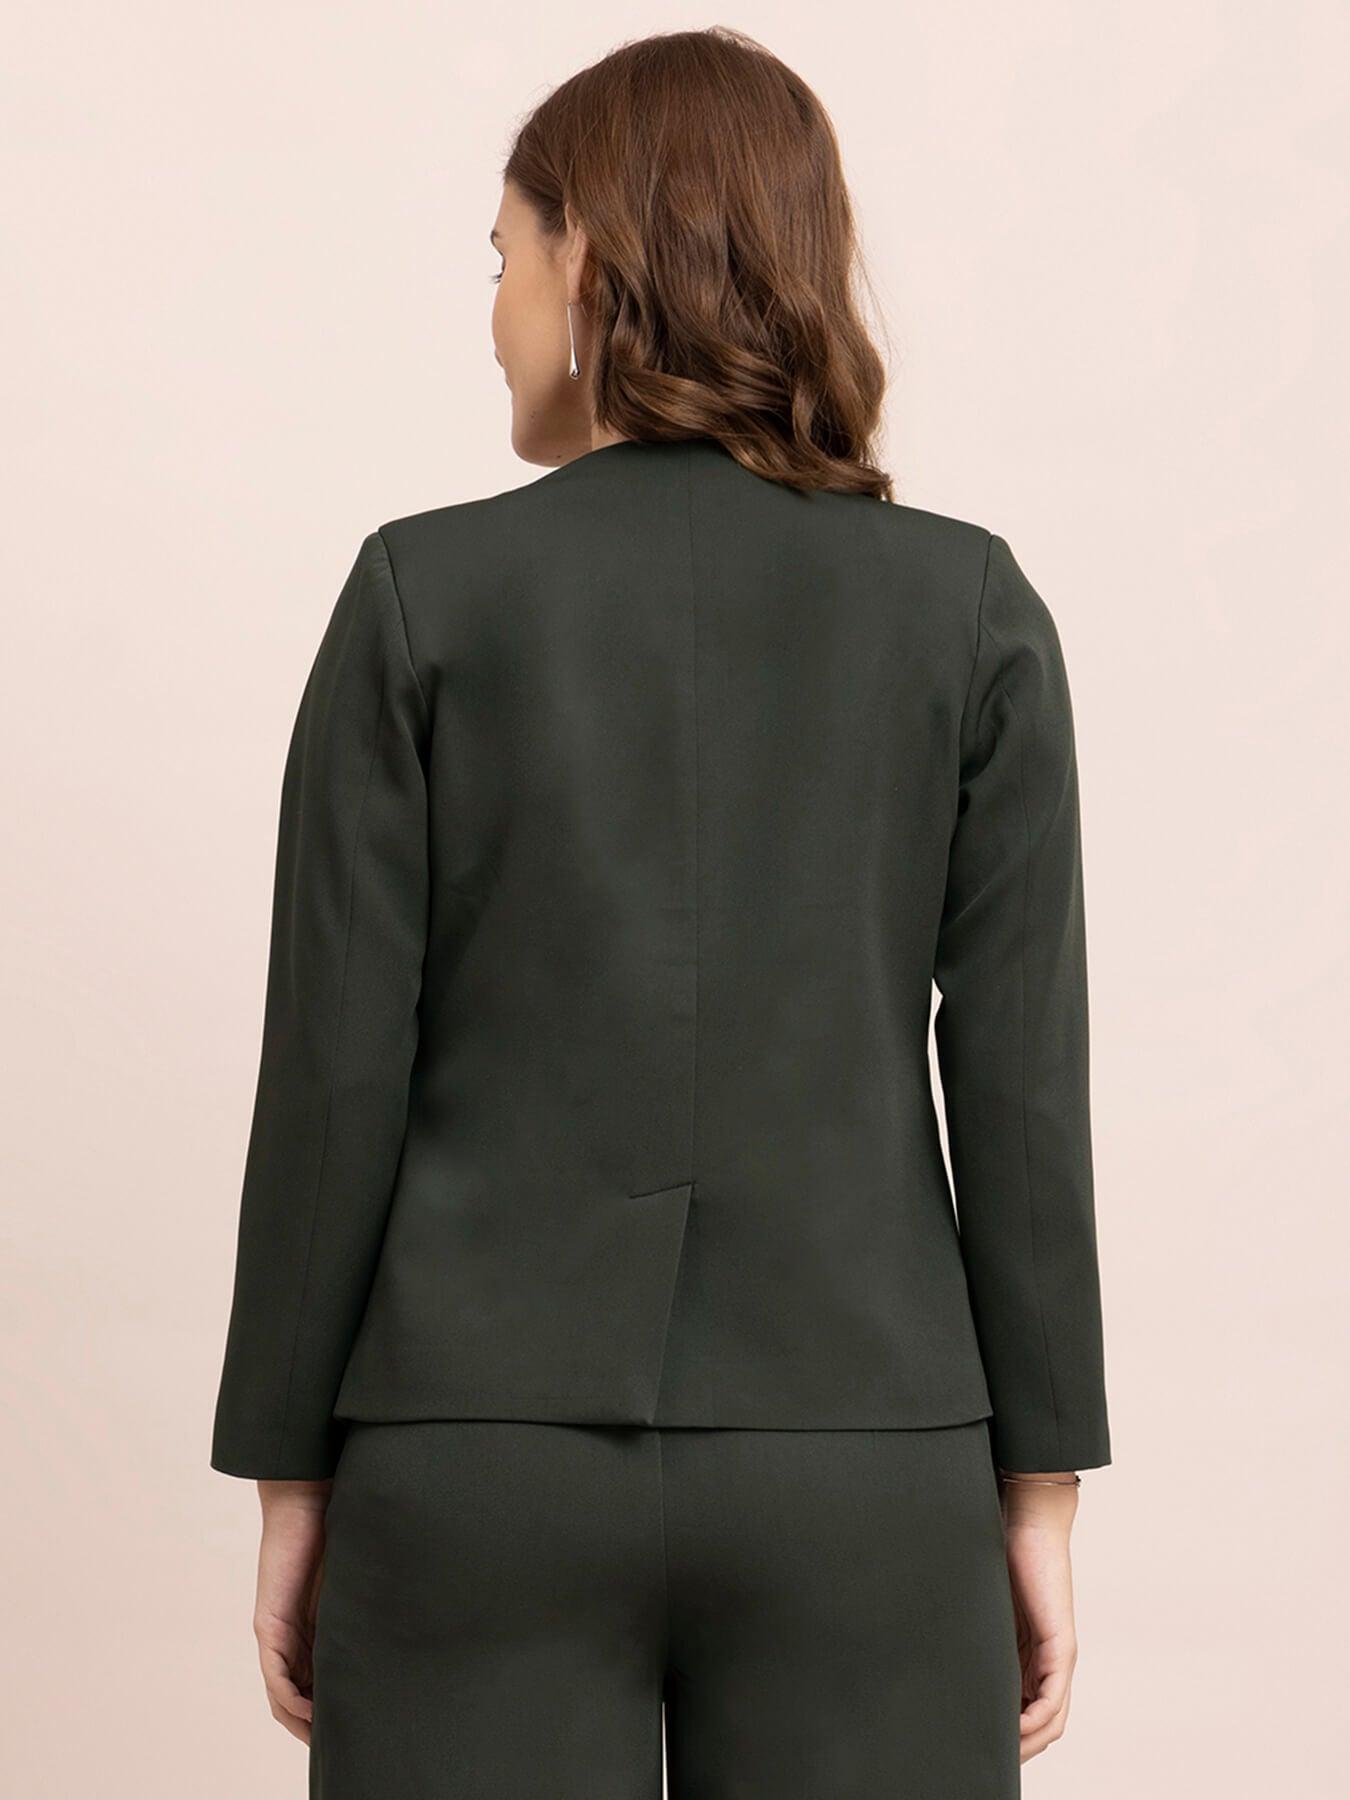 Open Front Blazer - Olive| Formal Jackets